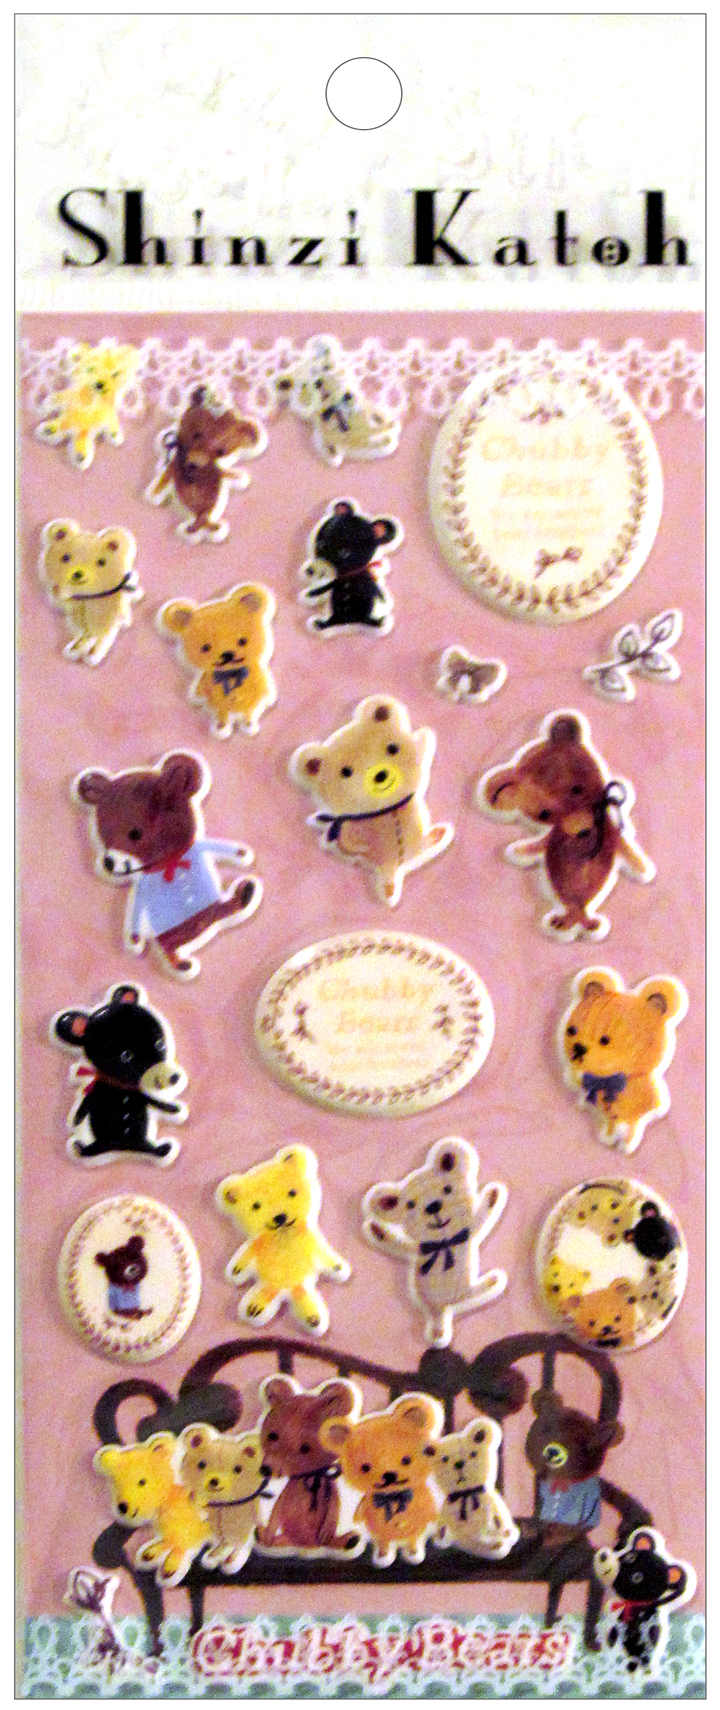 Shinzi Katoh Chubby Bears Marshmallow Sticker Sheet